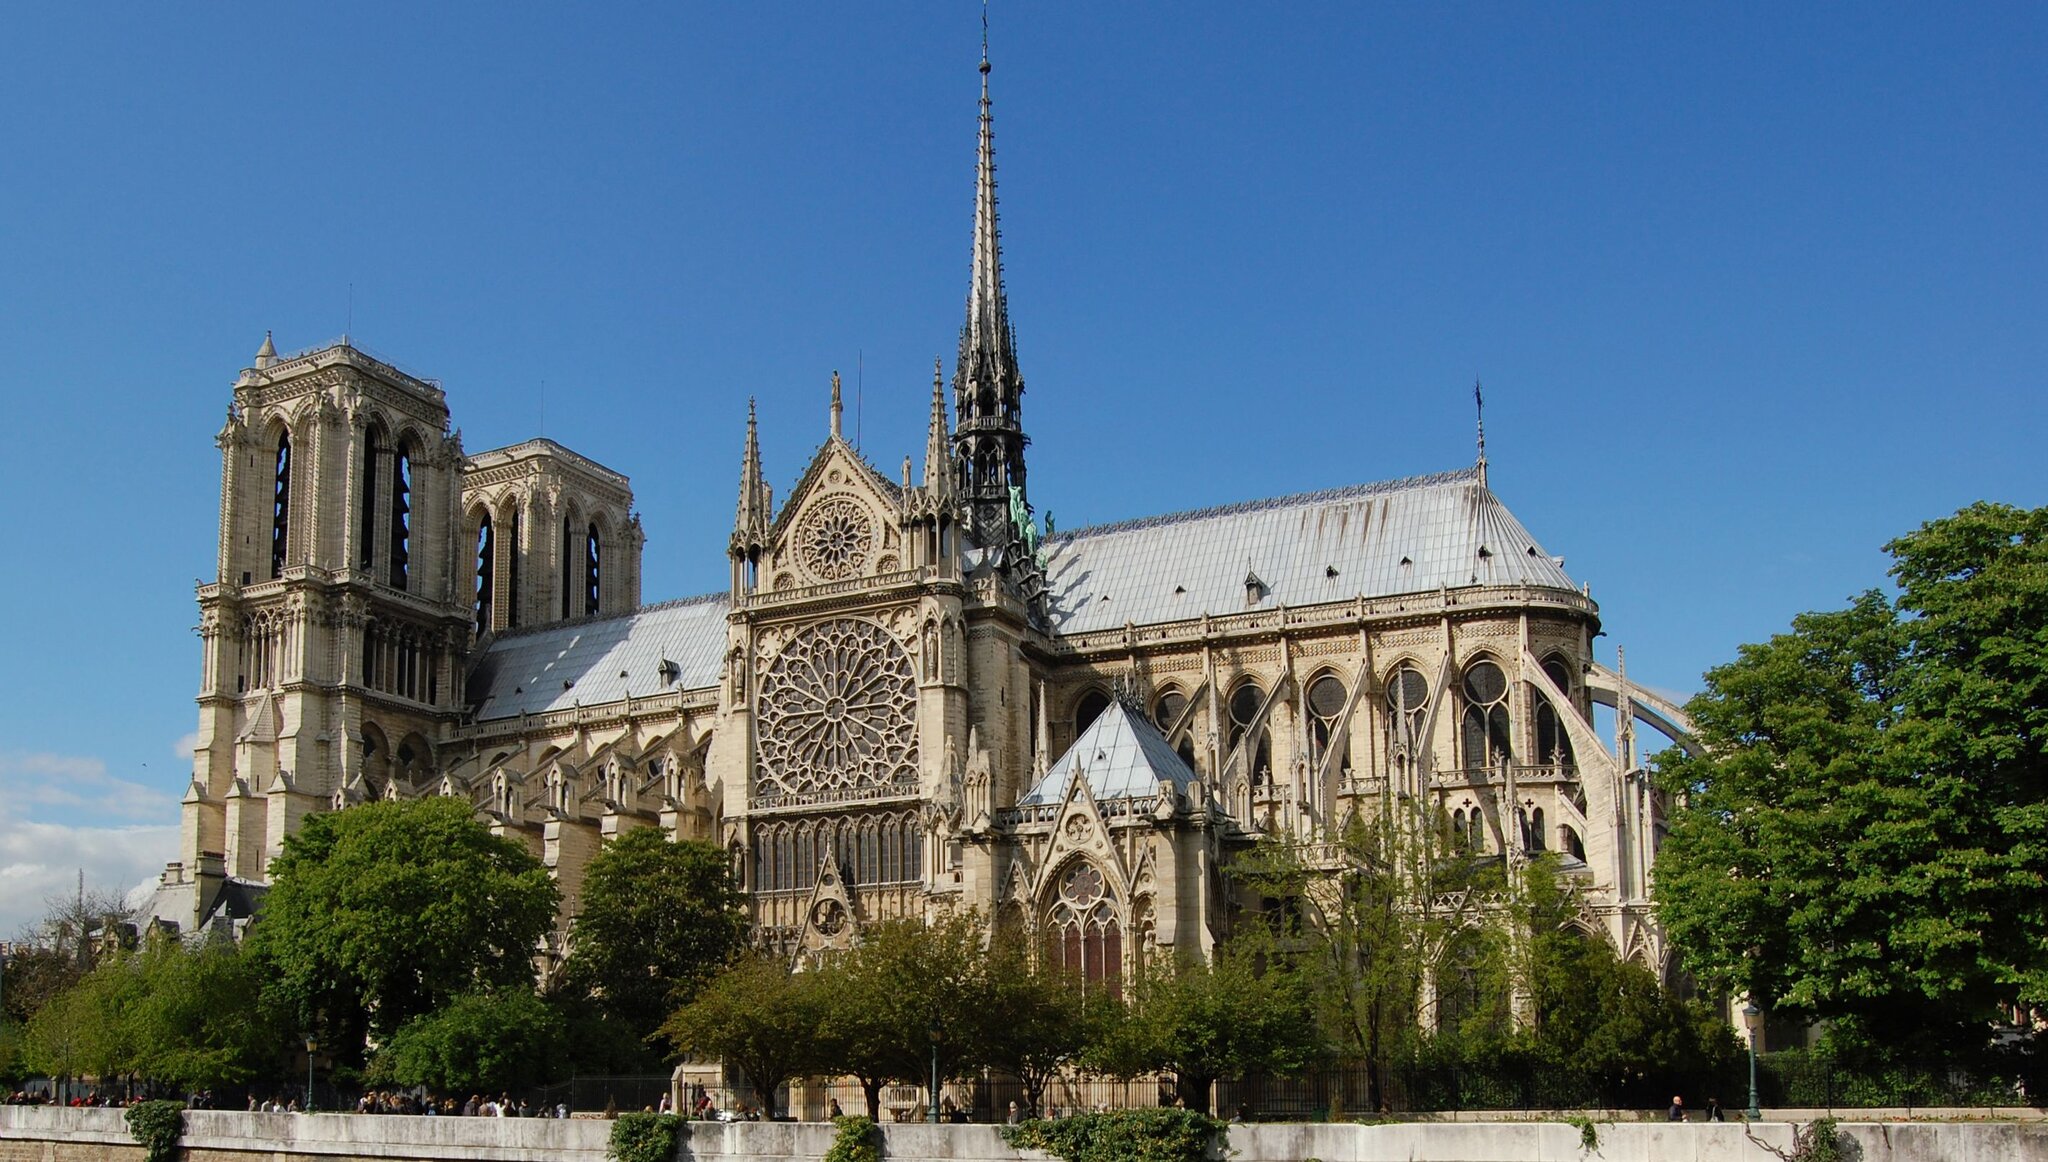 Południowa fasada katedry Notre Dame w Paryżu Południowa fasada katedry Notre Dame w Paryżu Źródło: Zuffe, licencja: CC BY-SA 3.0.